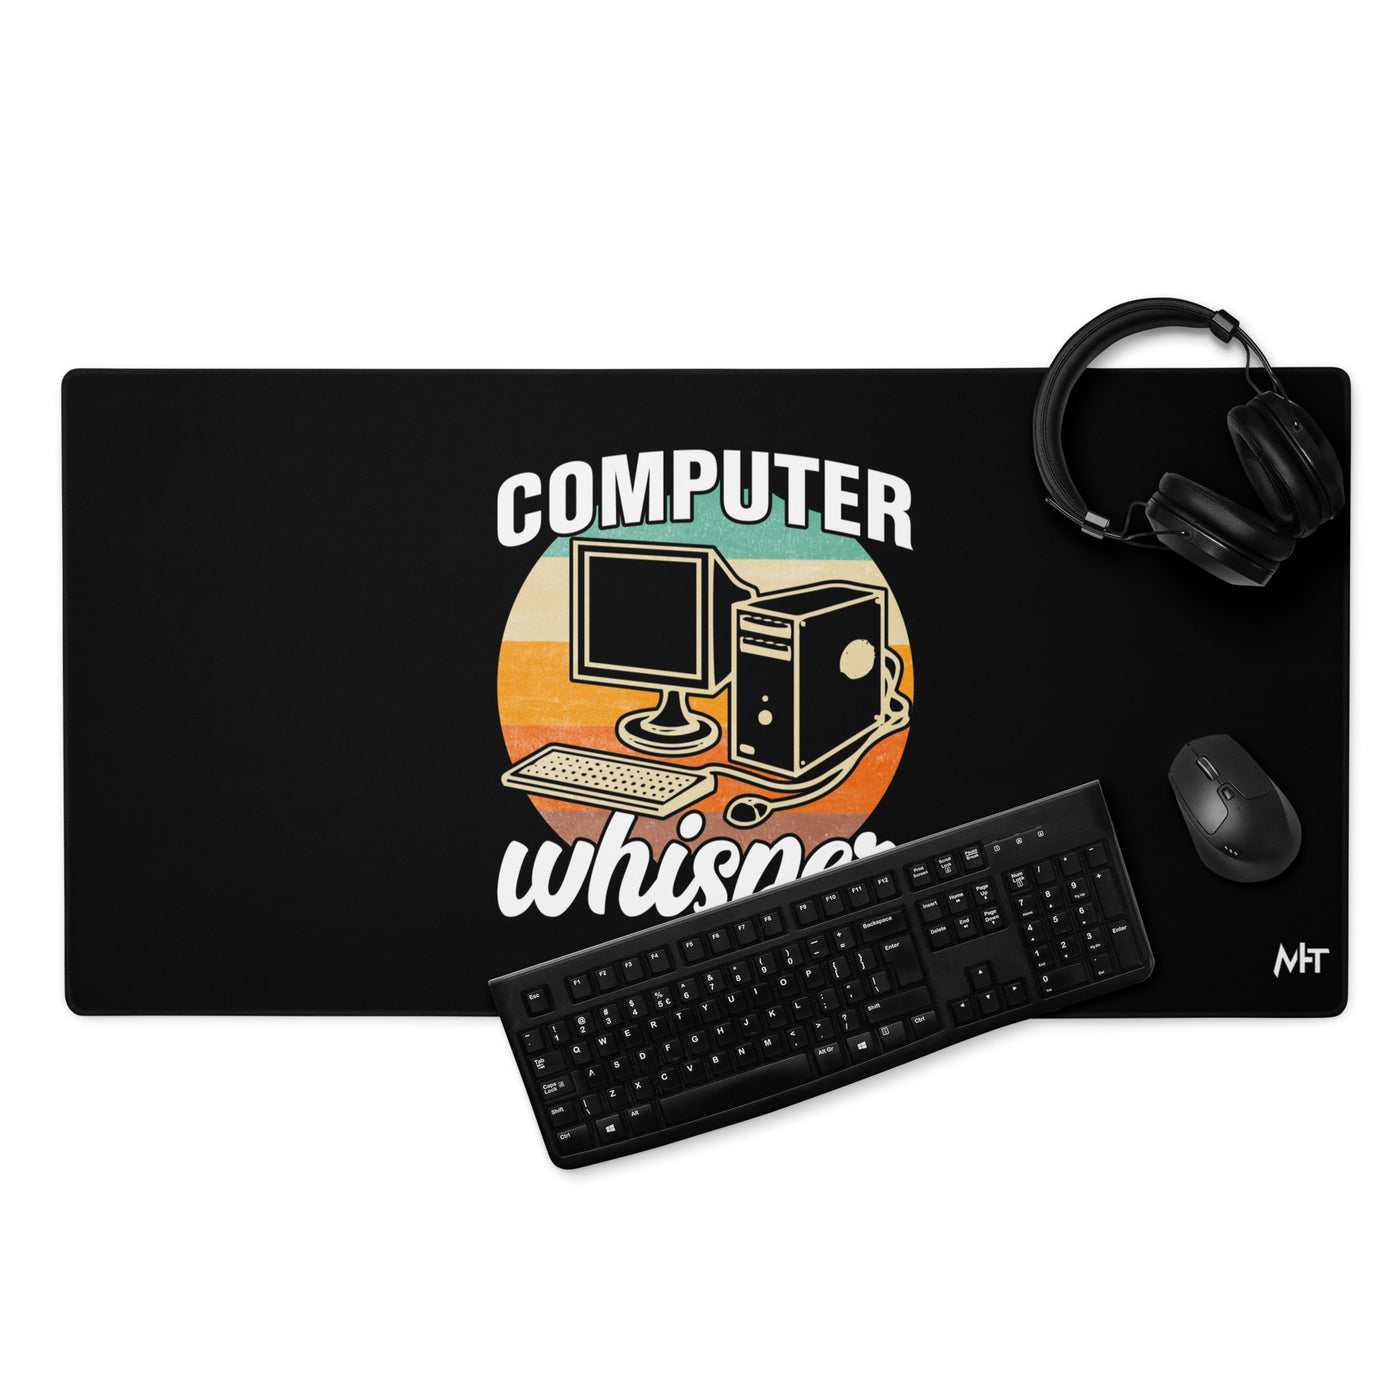 Computers whisper - Desk Mat